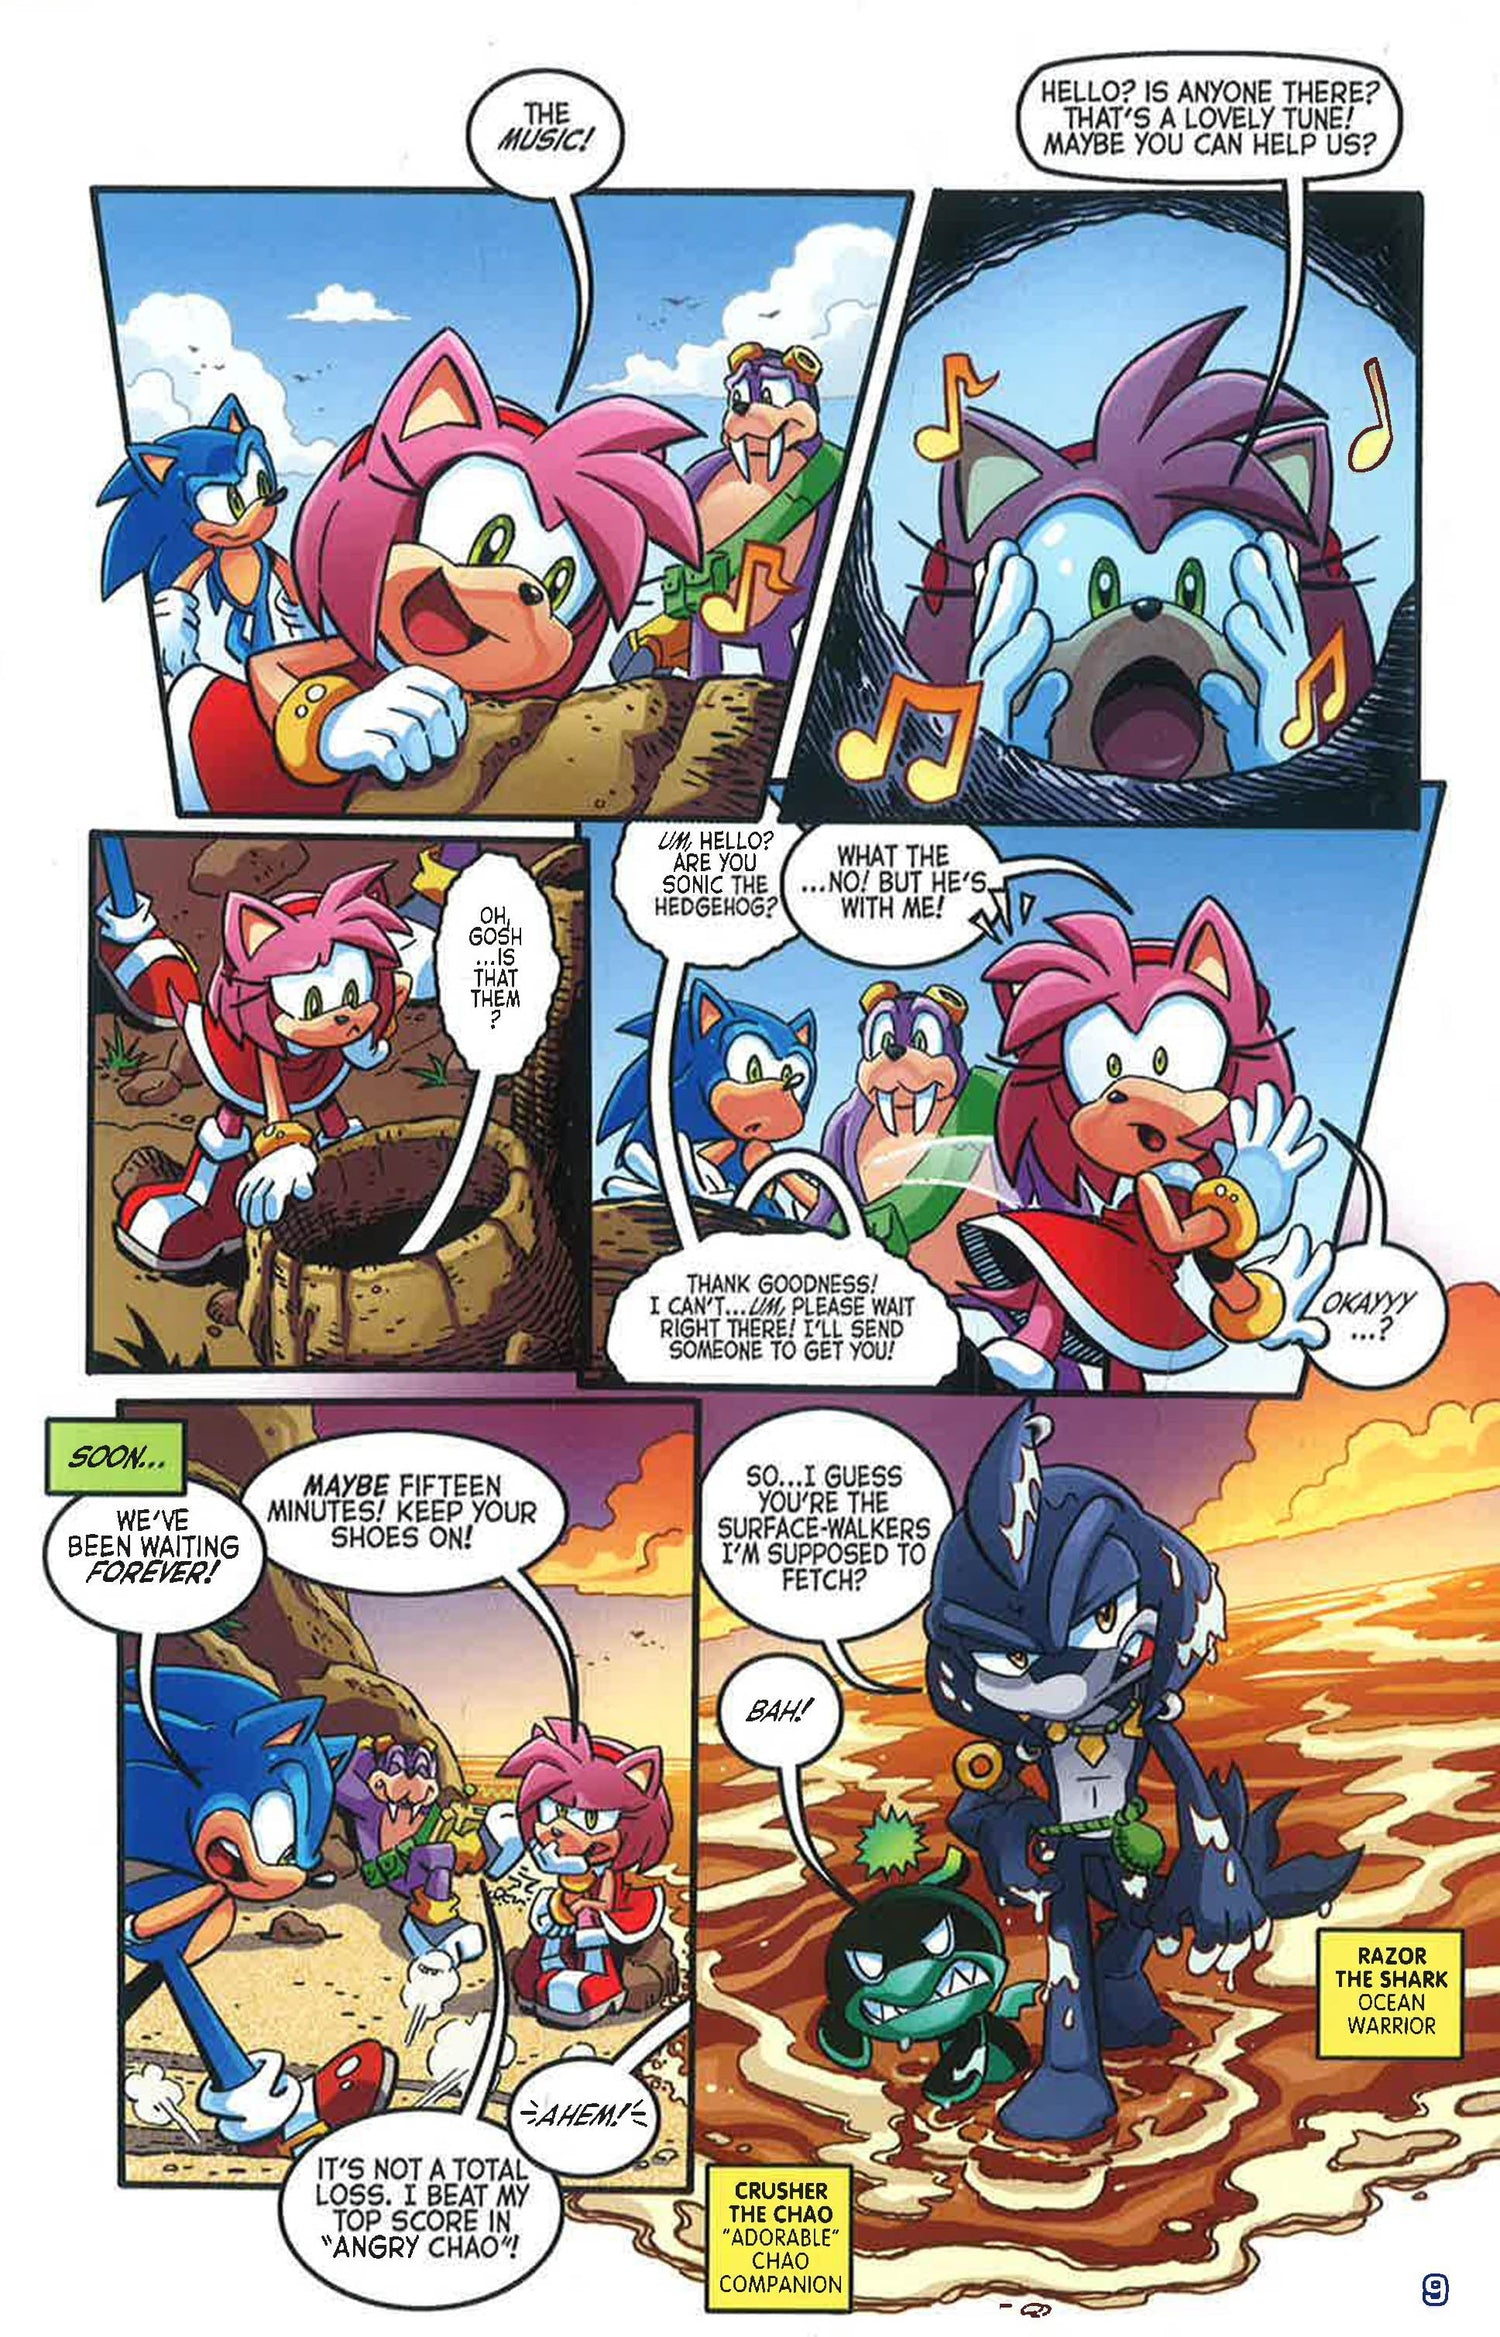 Sonic the Hedgehog 3: Waves of Change